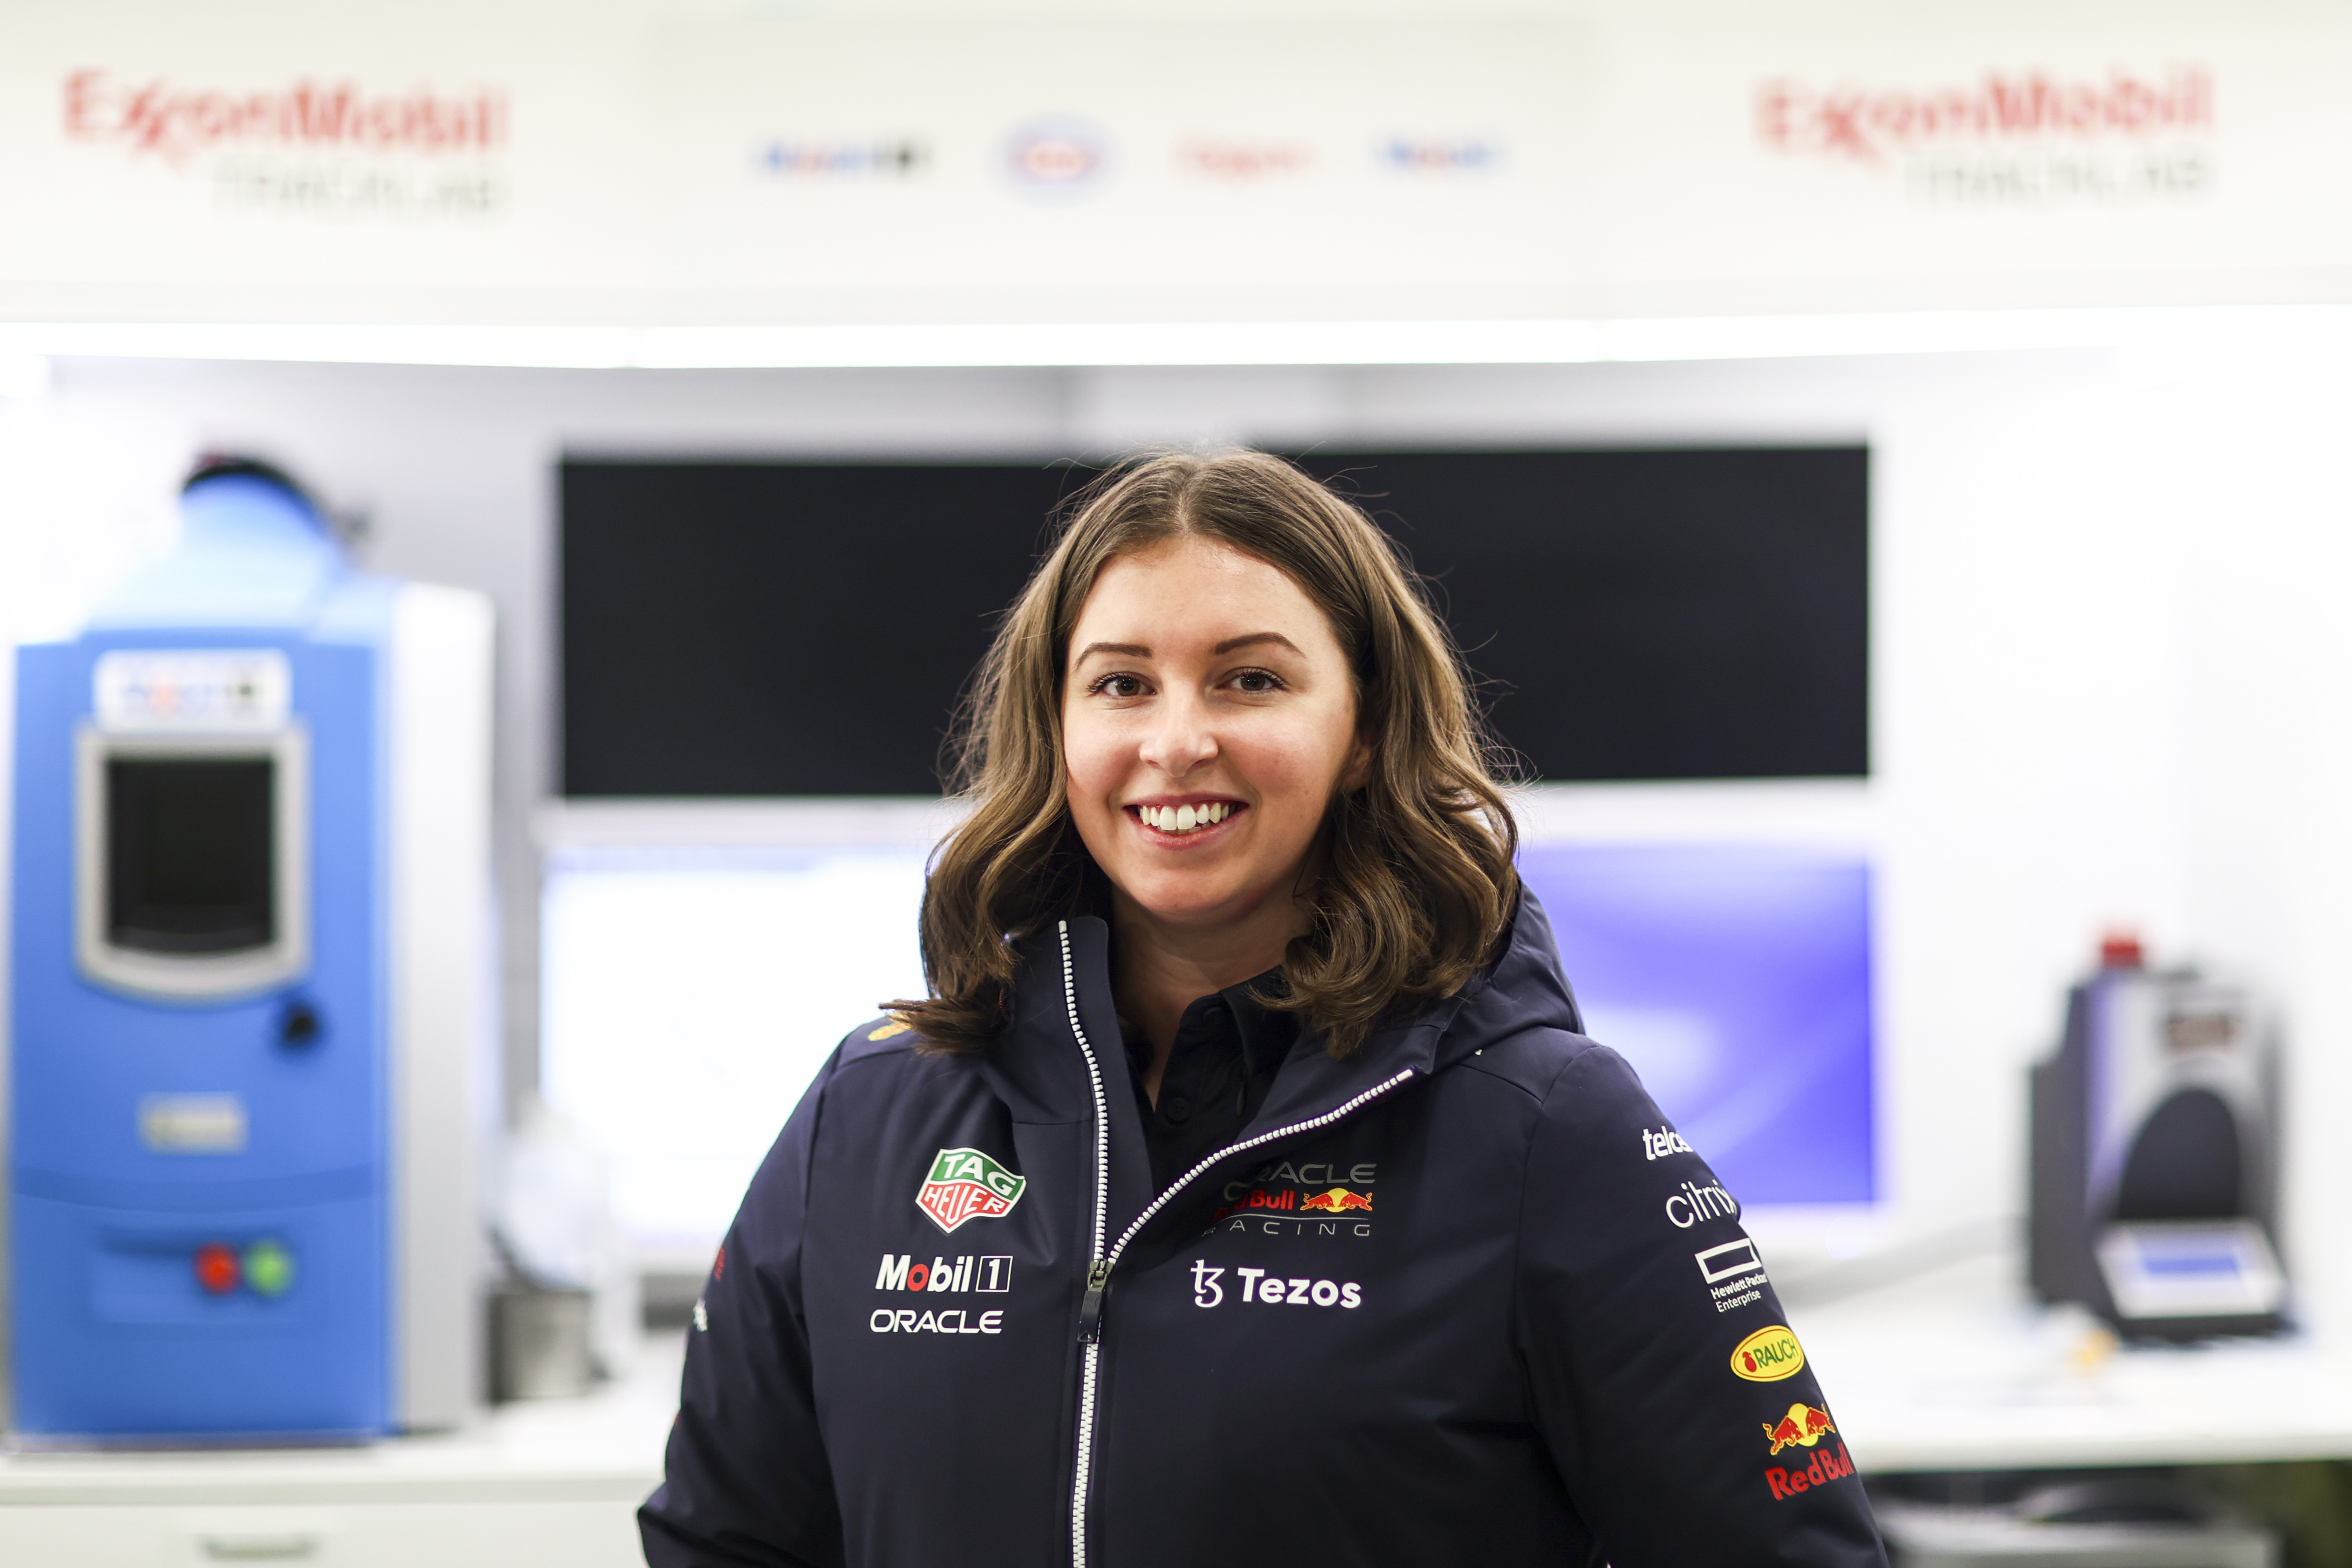 Fiona McEwan in Red Bull jacket